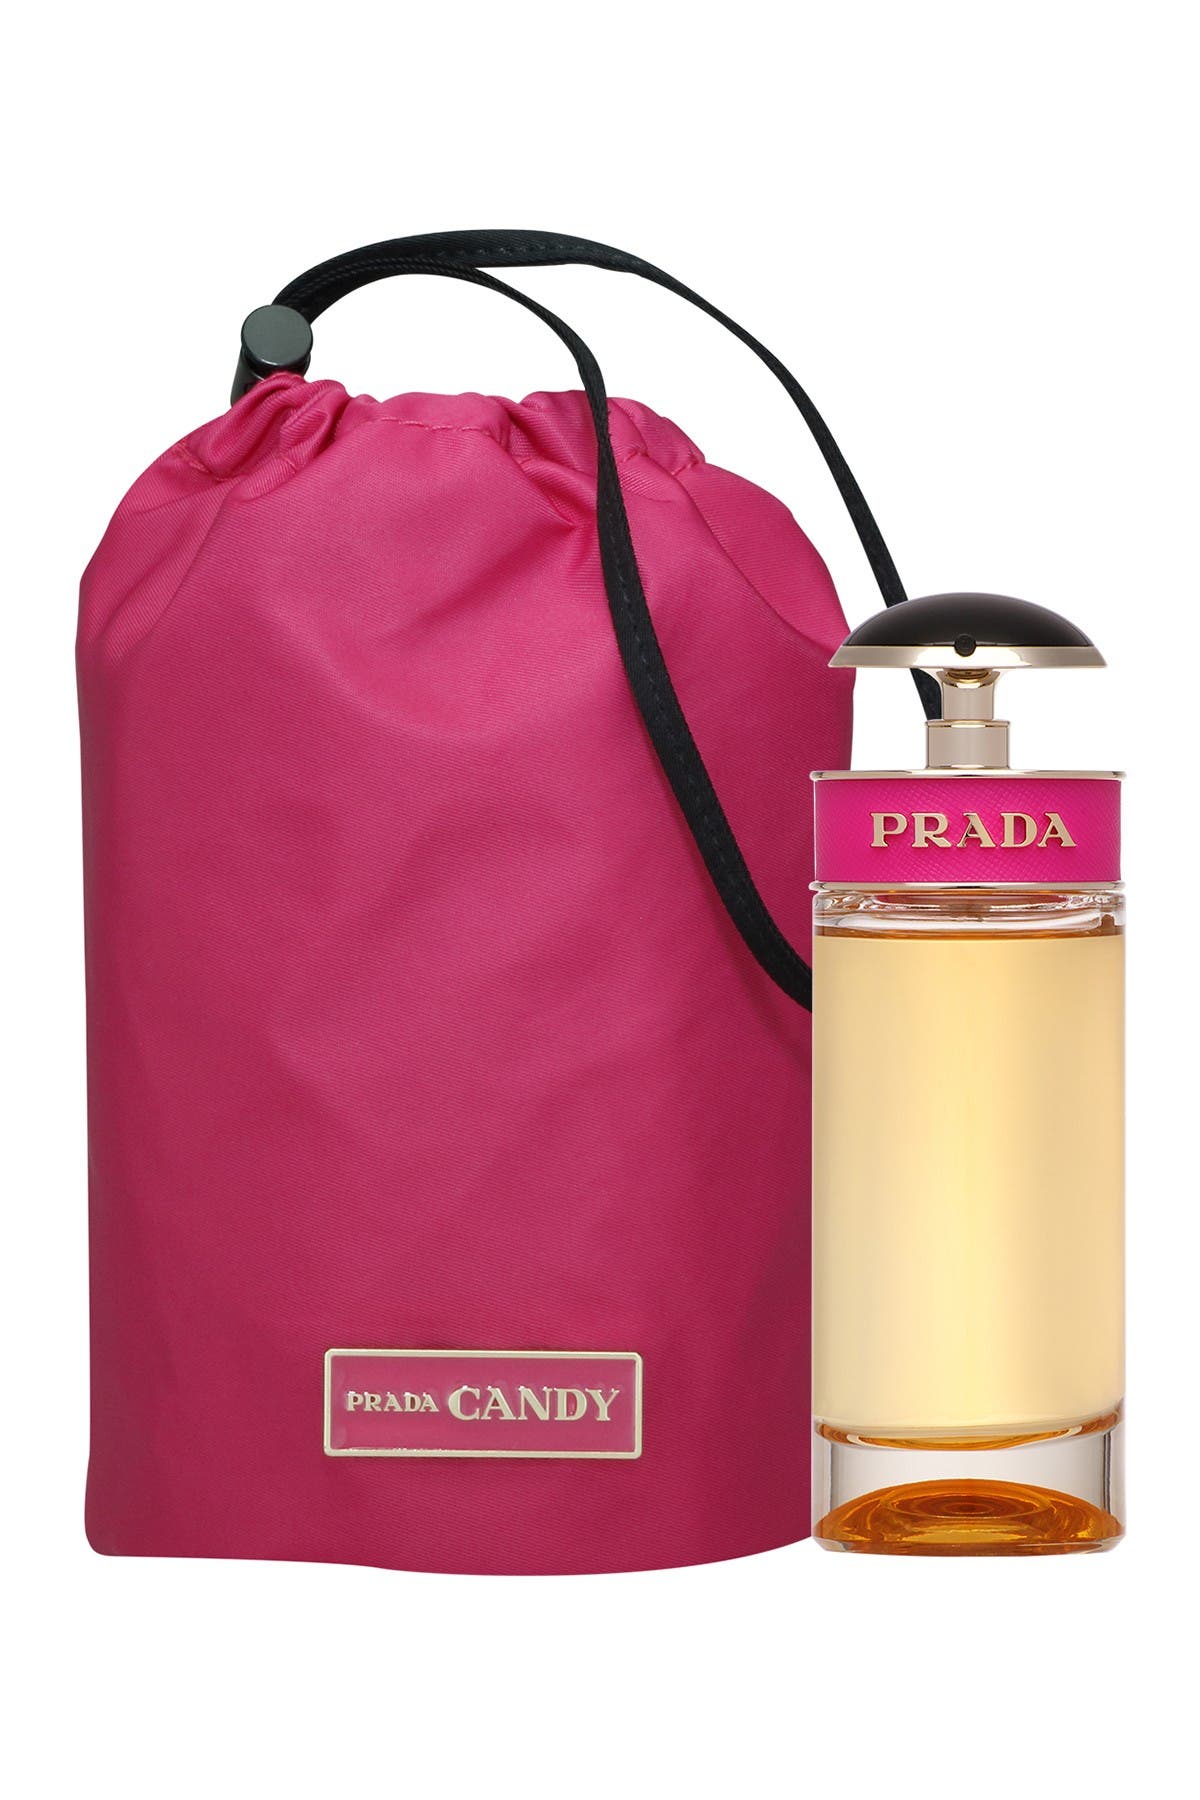 prada limited edition perfume